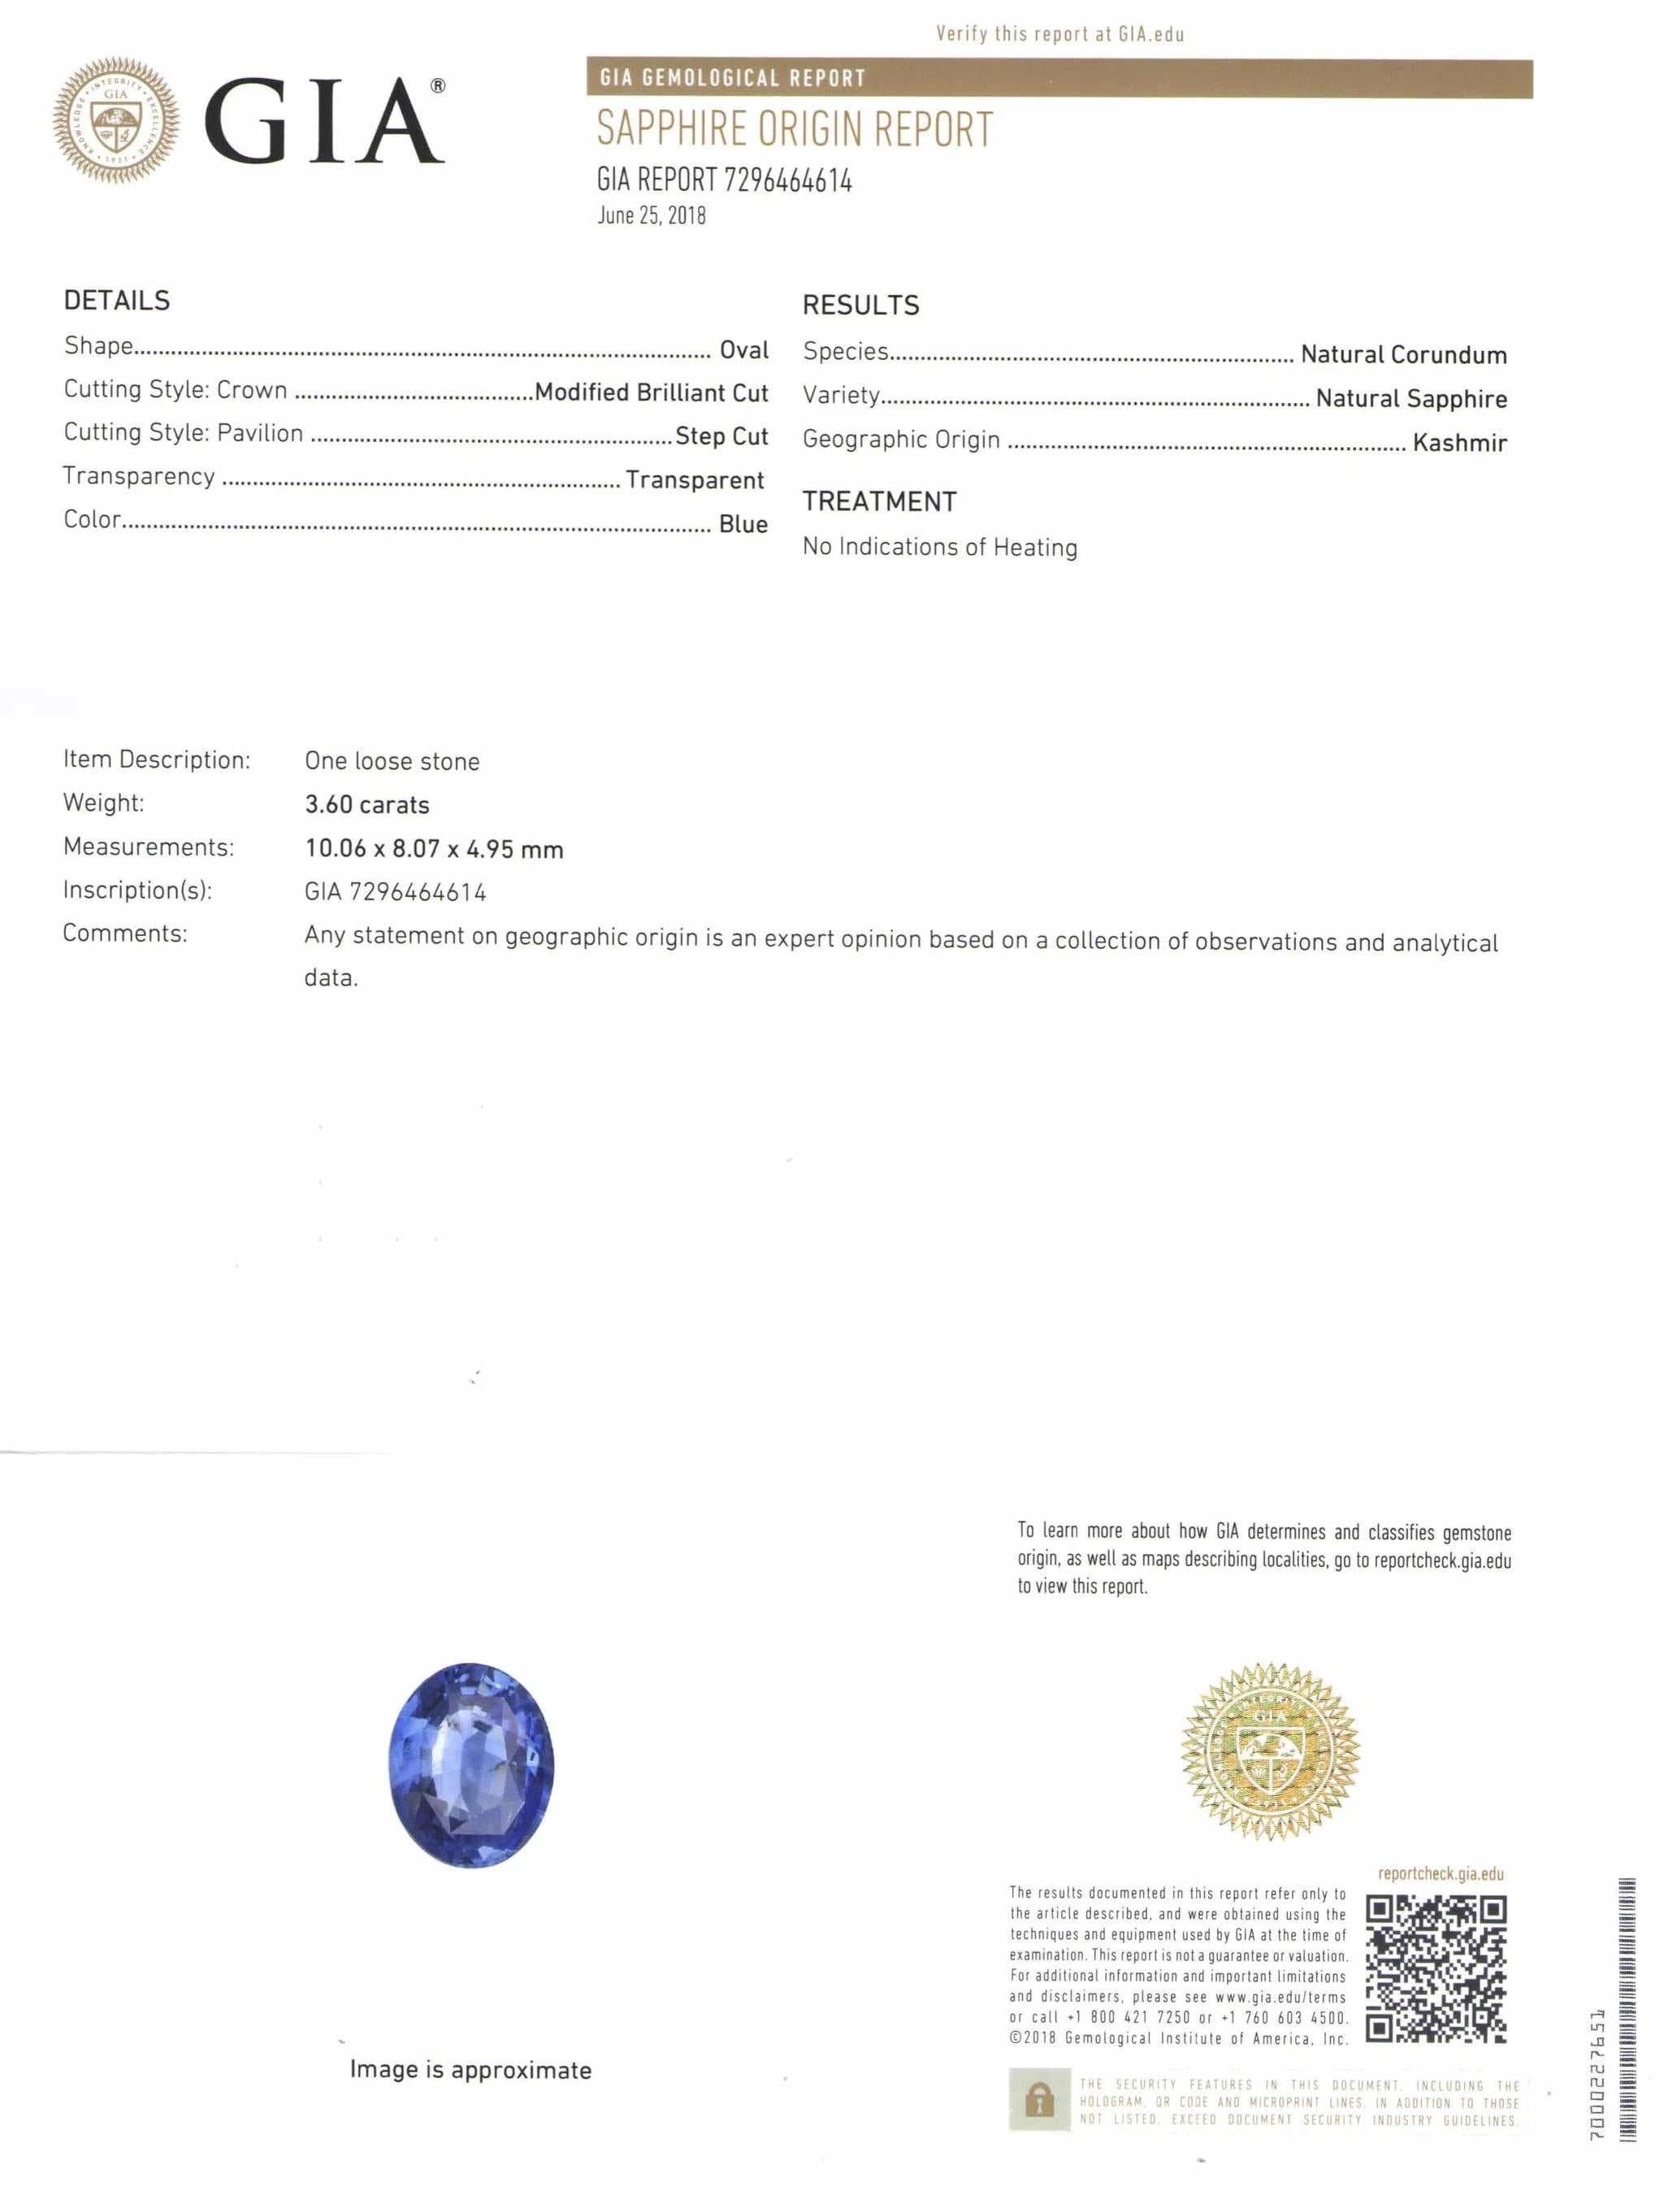 Modern GIA GRS IGI Certified 3.60 Carat Kashmir No Heat Blue Sapphire Diamond Ring For Sale